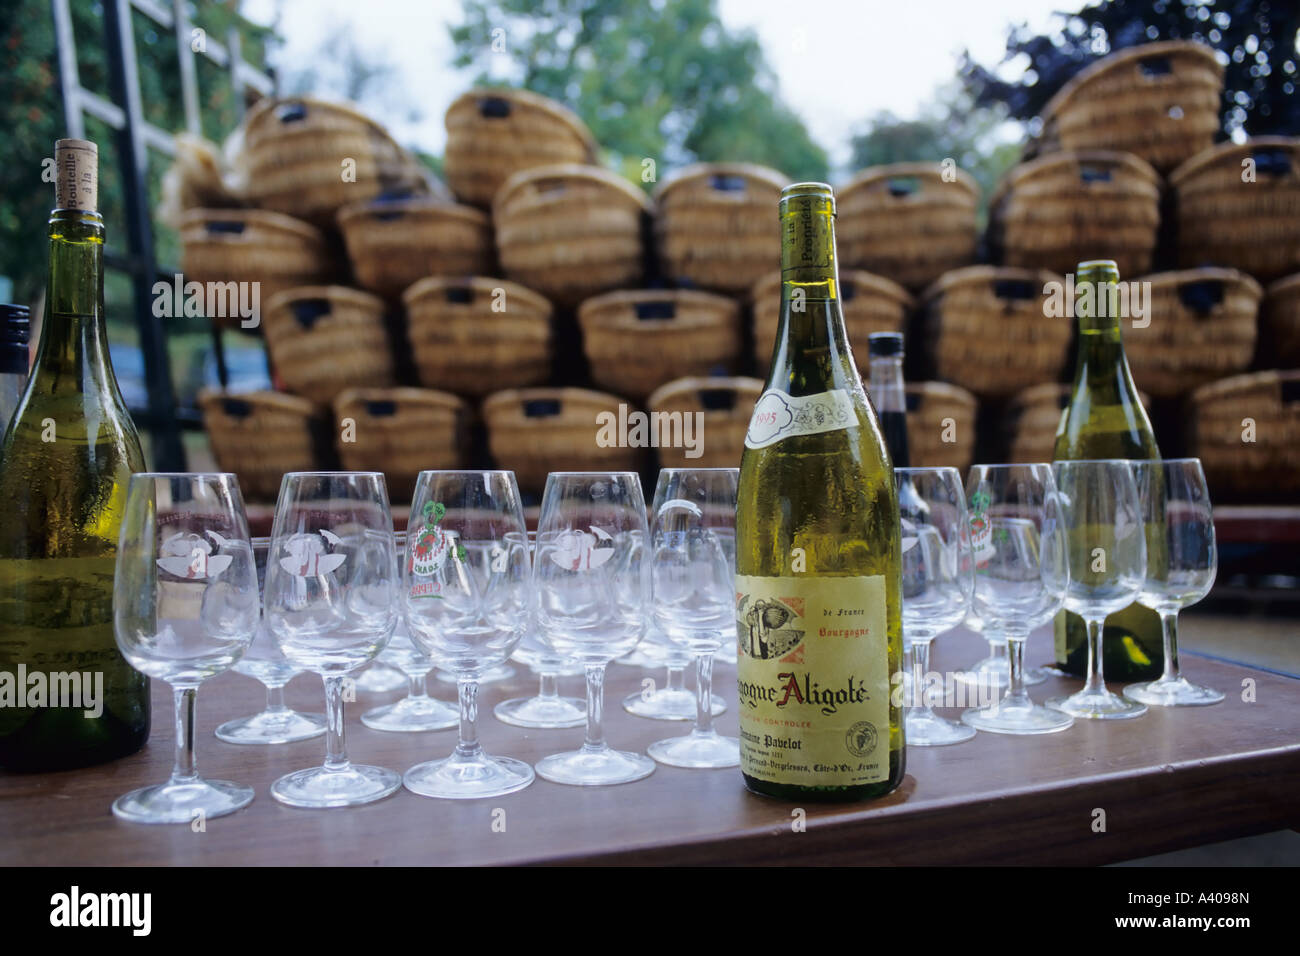 Empty glasses, Bourgogne Aligoté white wine bottles, stacked Benaton baskets in background, winery,Côte de Beaune, Côte d'Or, Burgundy, France, Europe Stock Photo